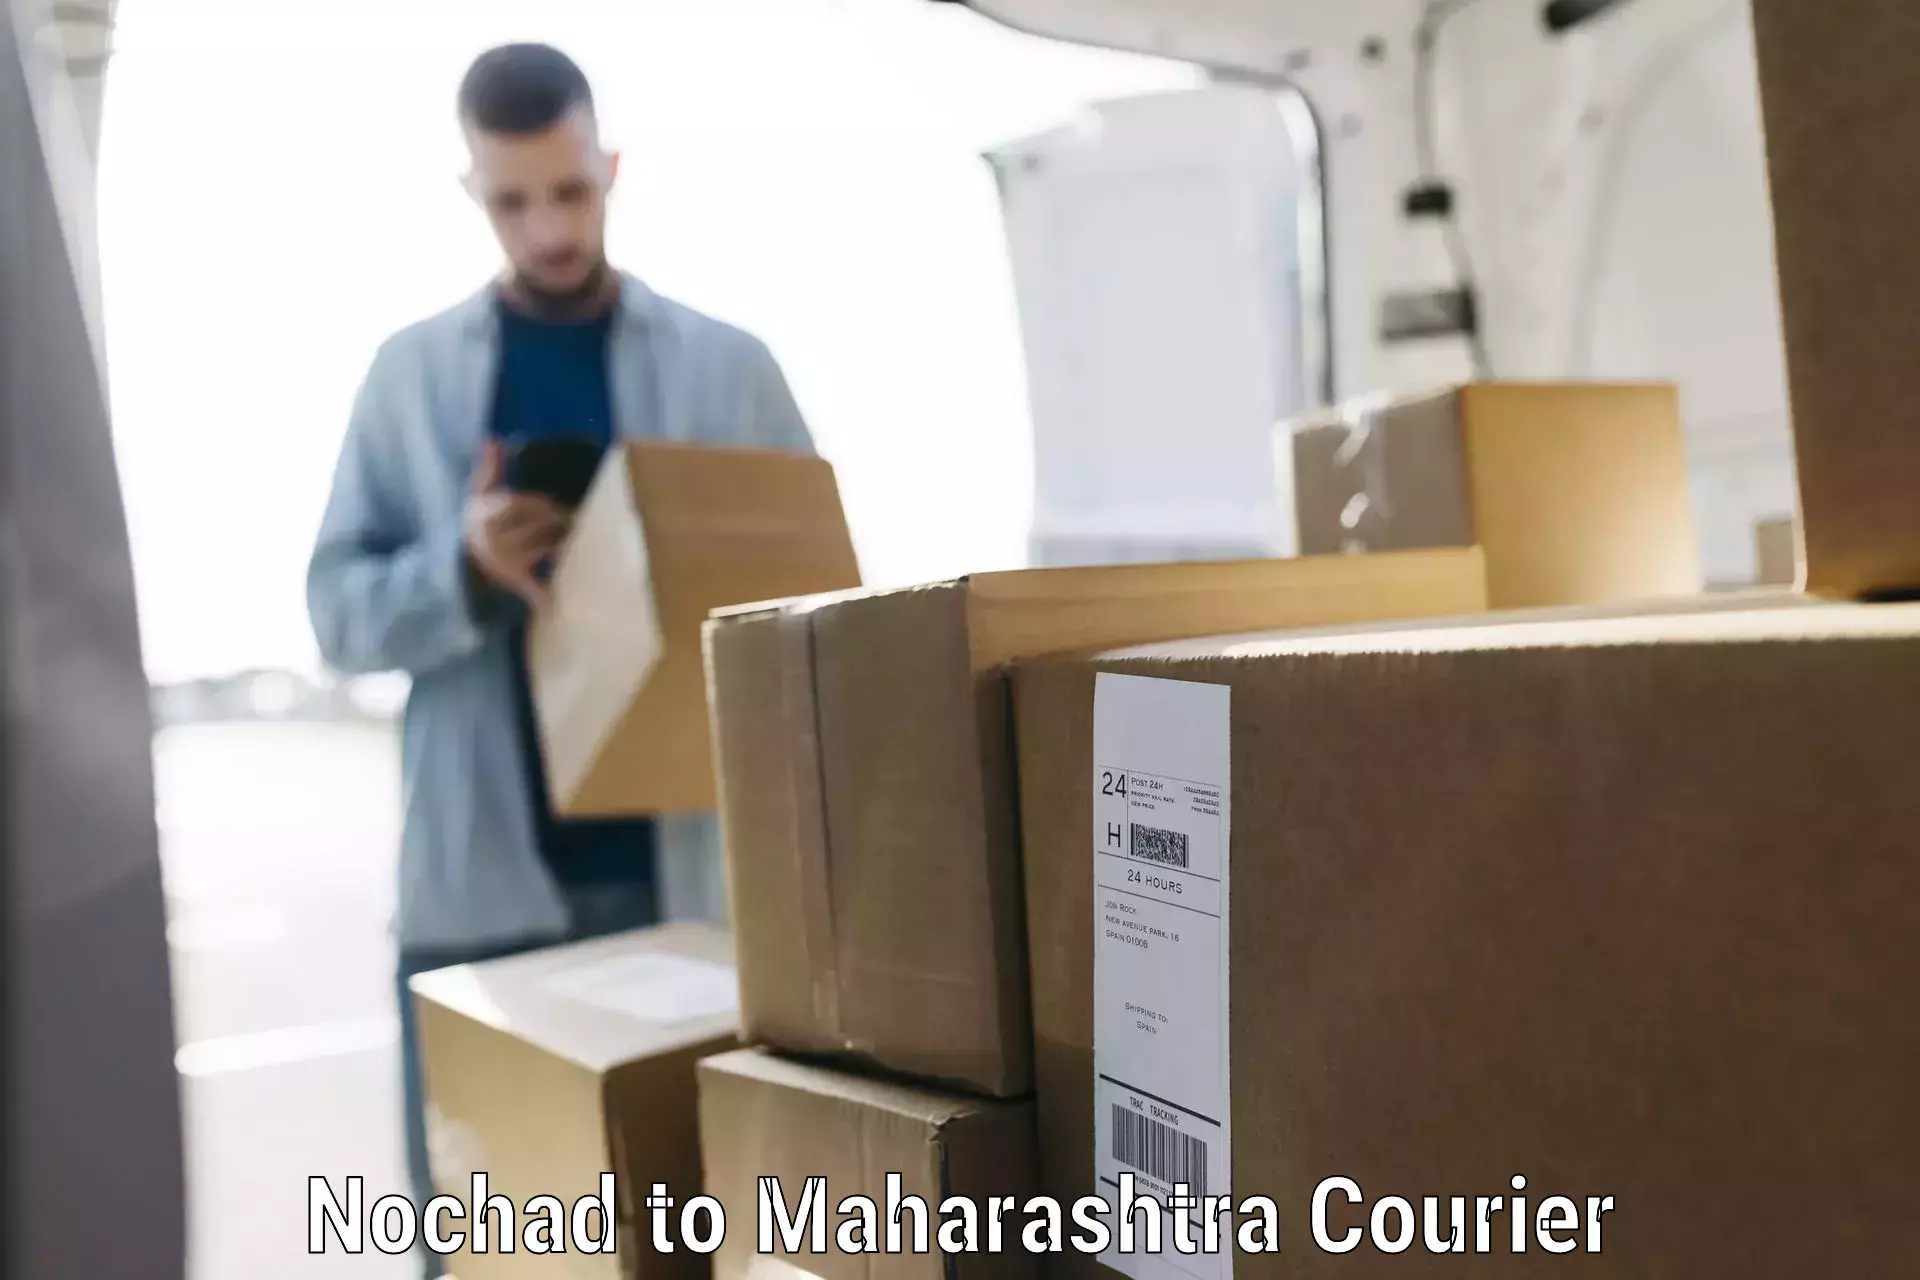 Baggage relocation service Nochad to Maharashtra